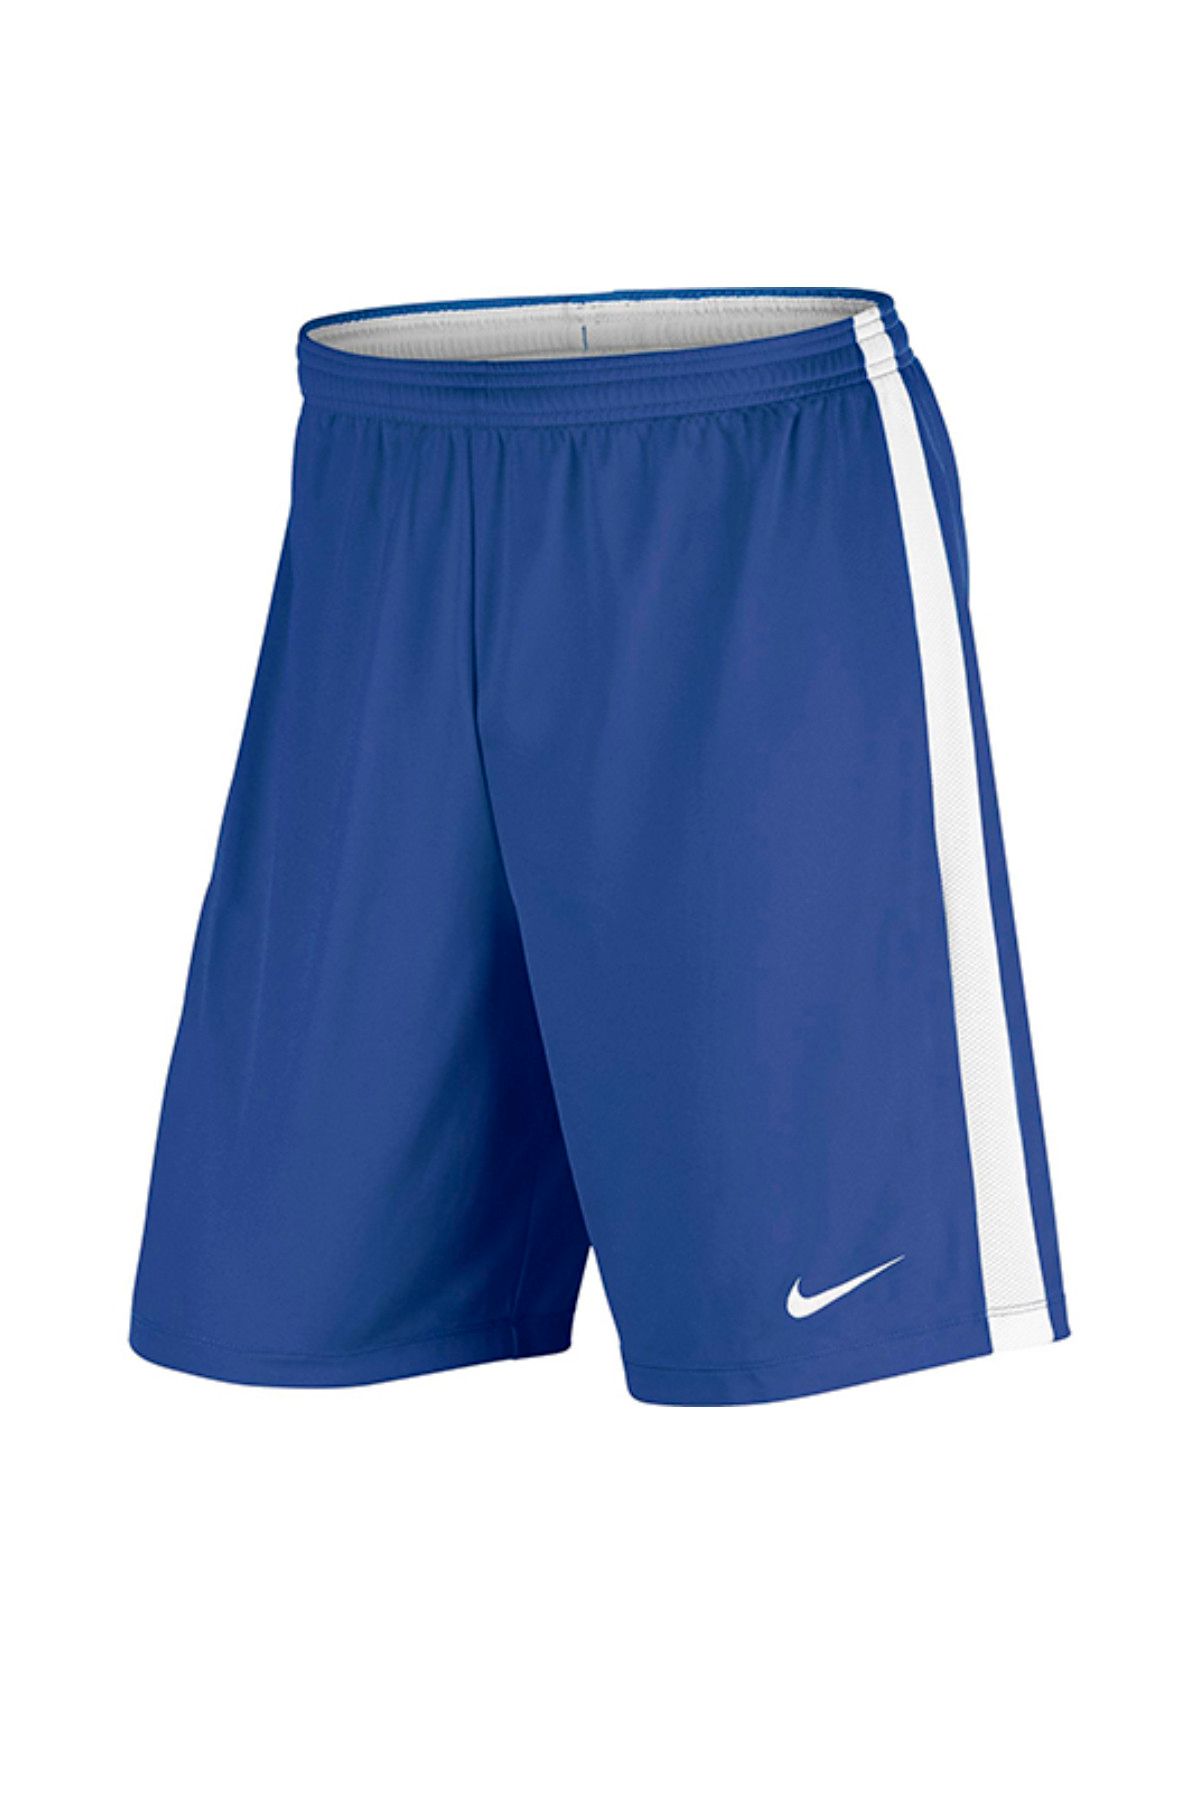 Nike Erkek Şort - Dry Academy Erkek Futbol Şortu - 832508-480